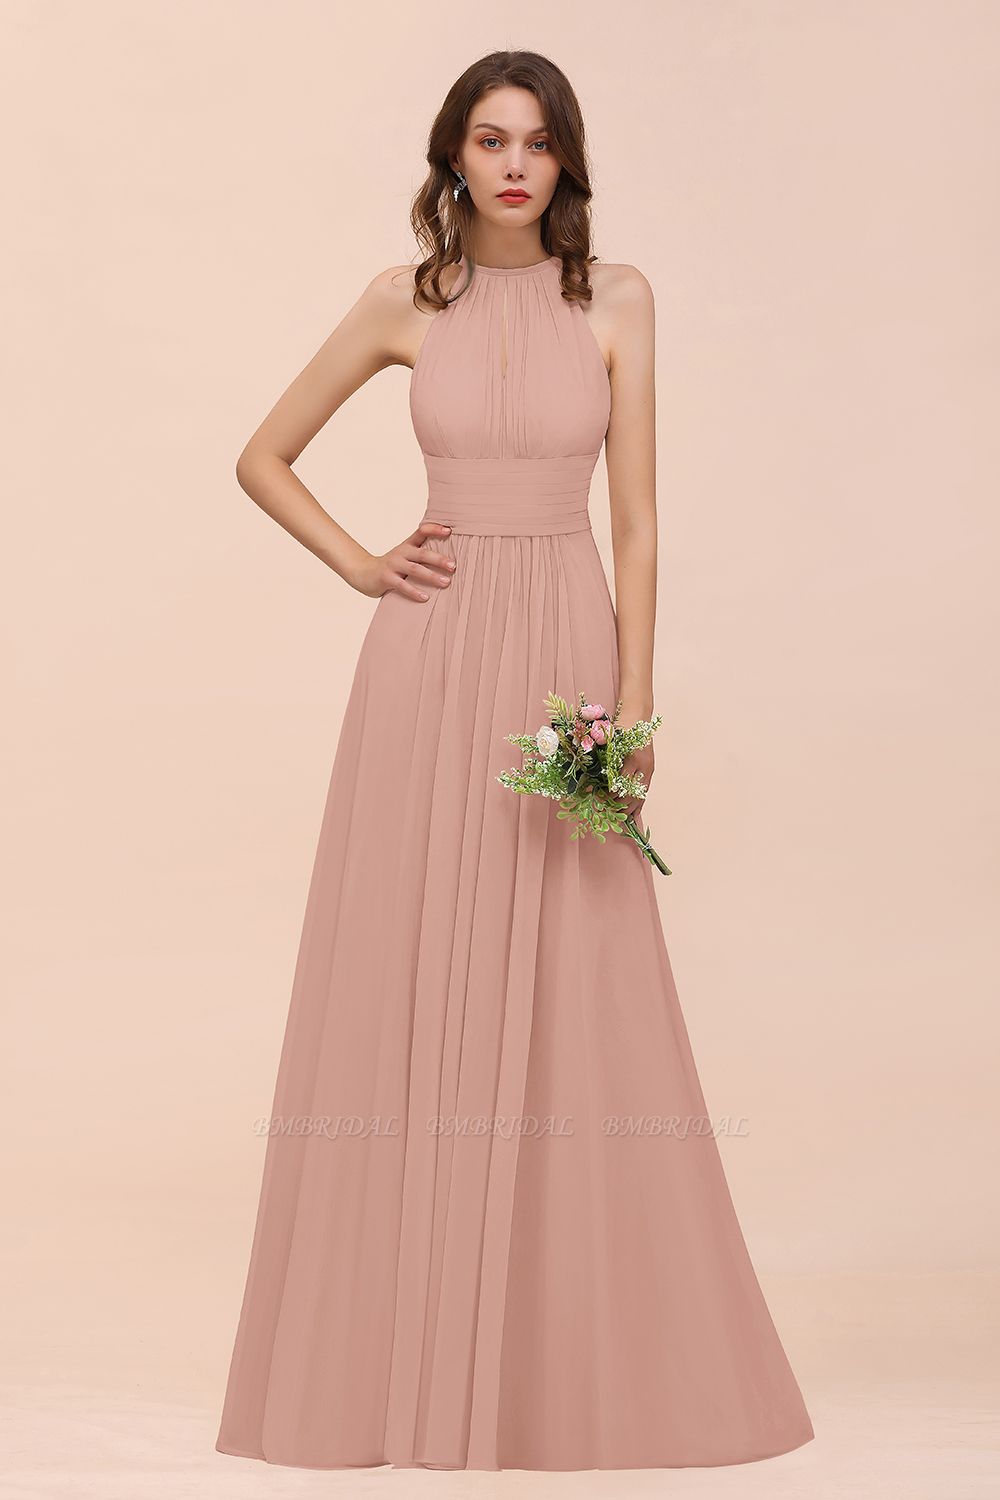 BMbridal Elegant Chiffon Jewel Ruffle Champagne Affordable Bridesmaid Dress Online